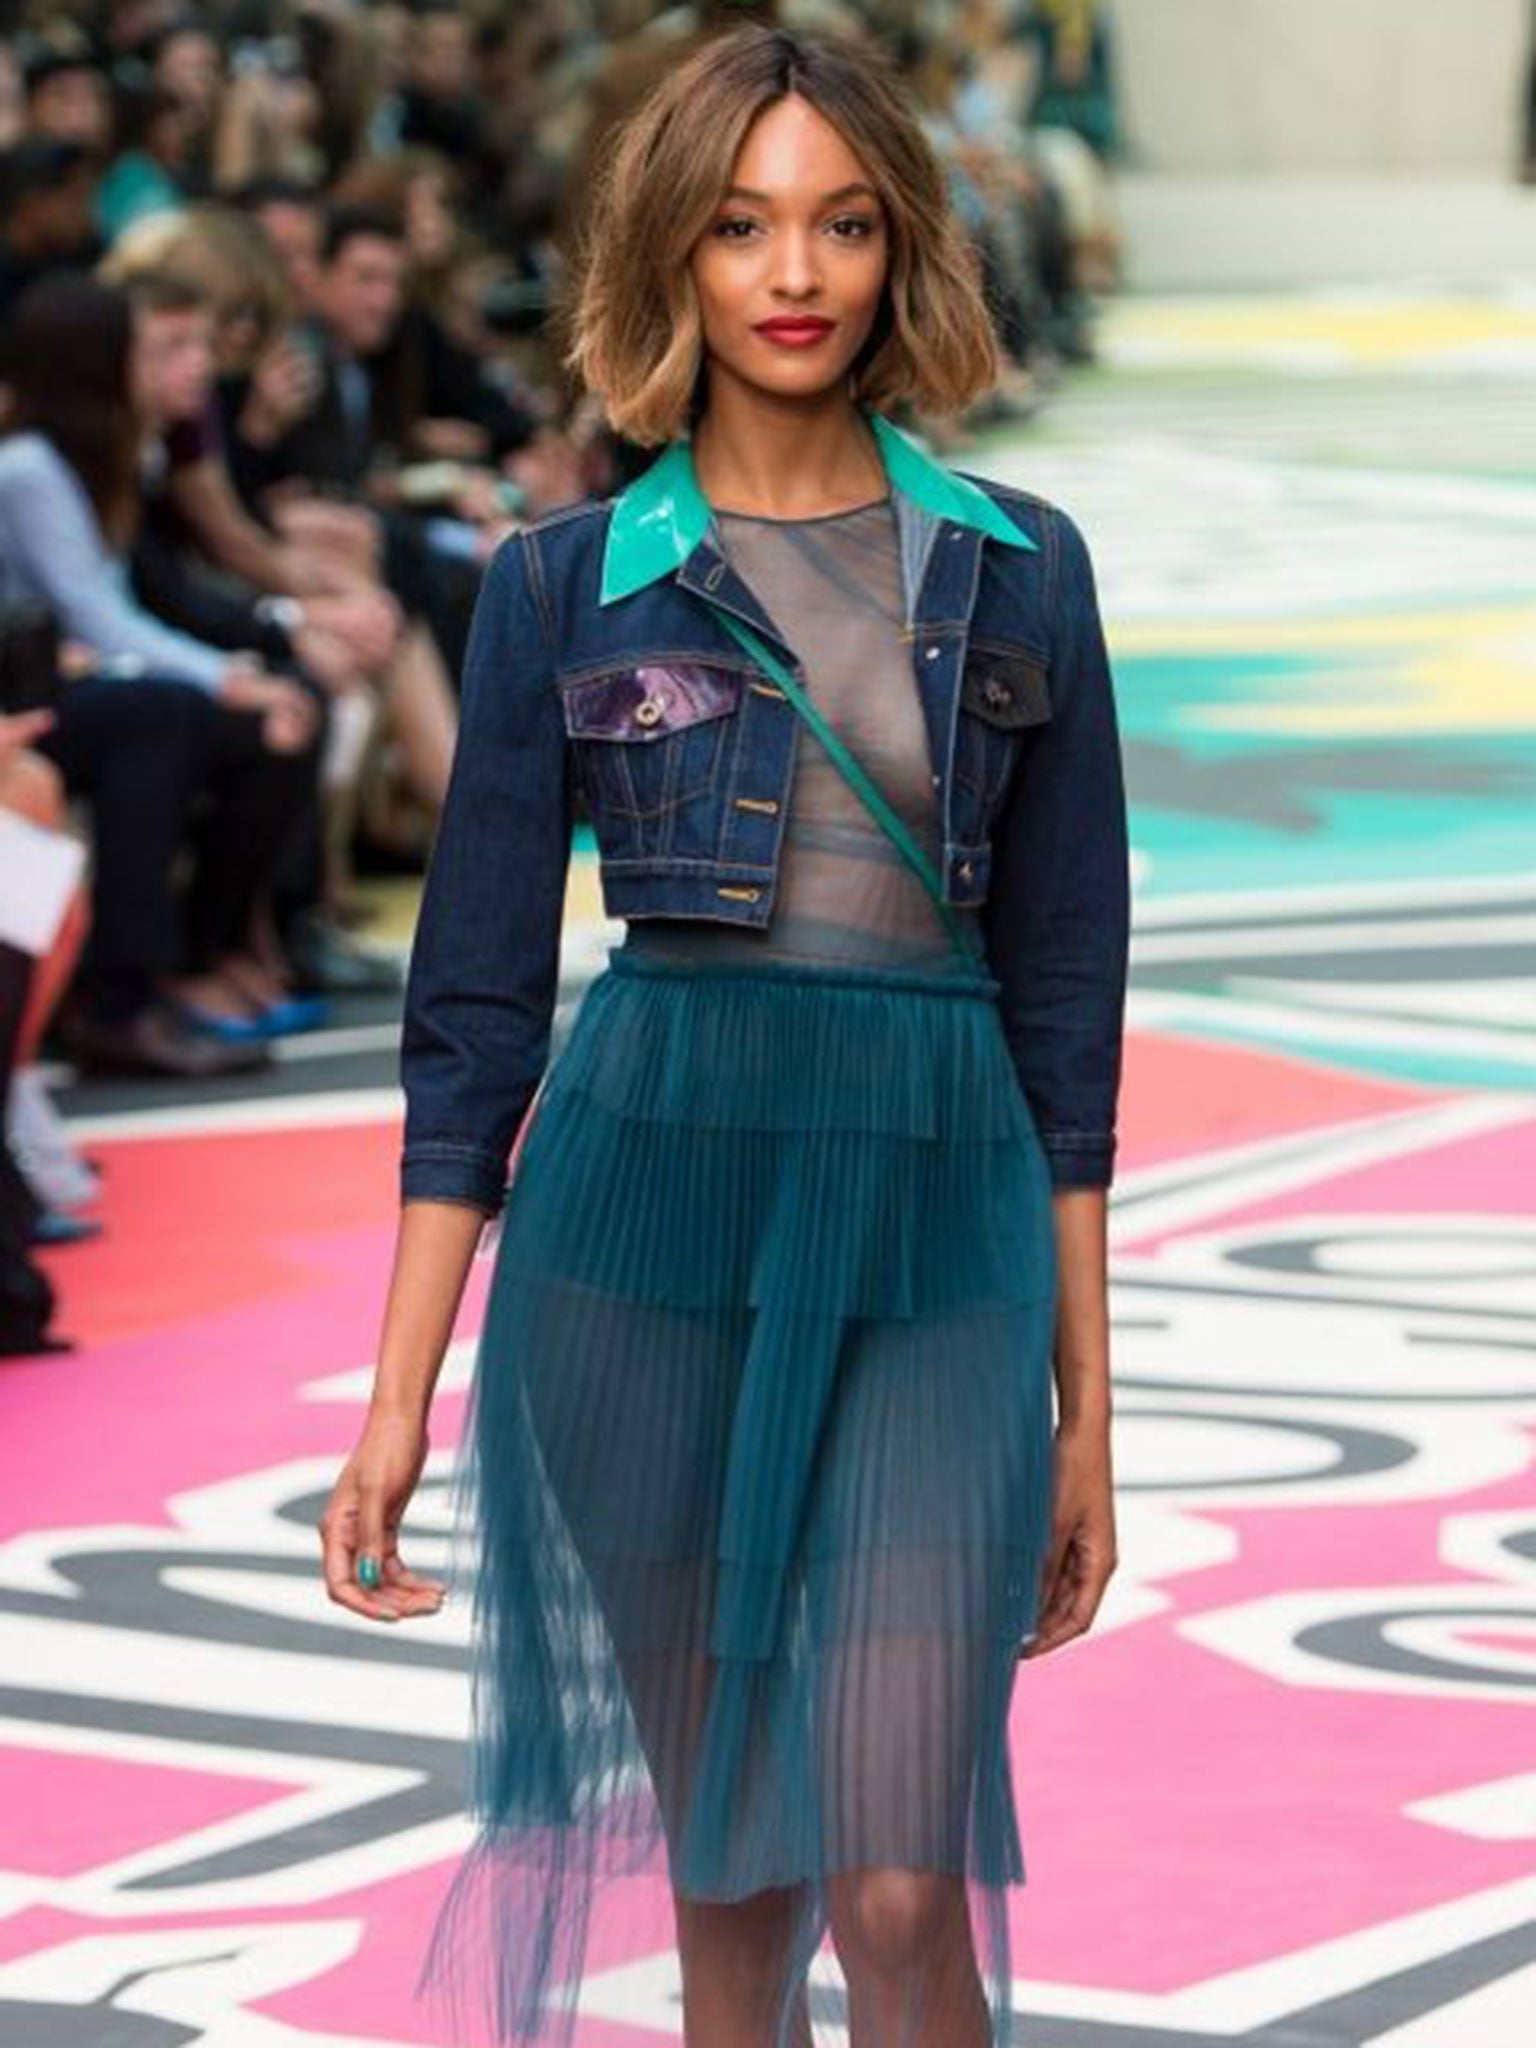 Model Jourdan Dunn walks the runway at the Burberry Prorsum show during London Fashion Week spring/summer 2015